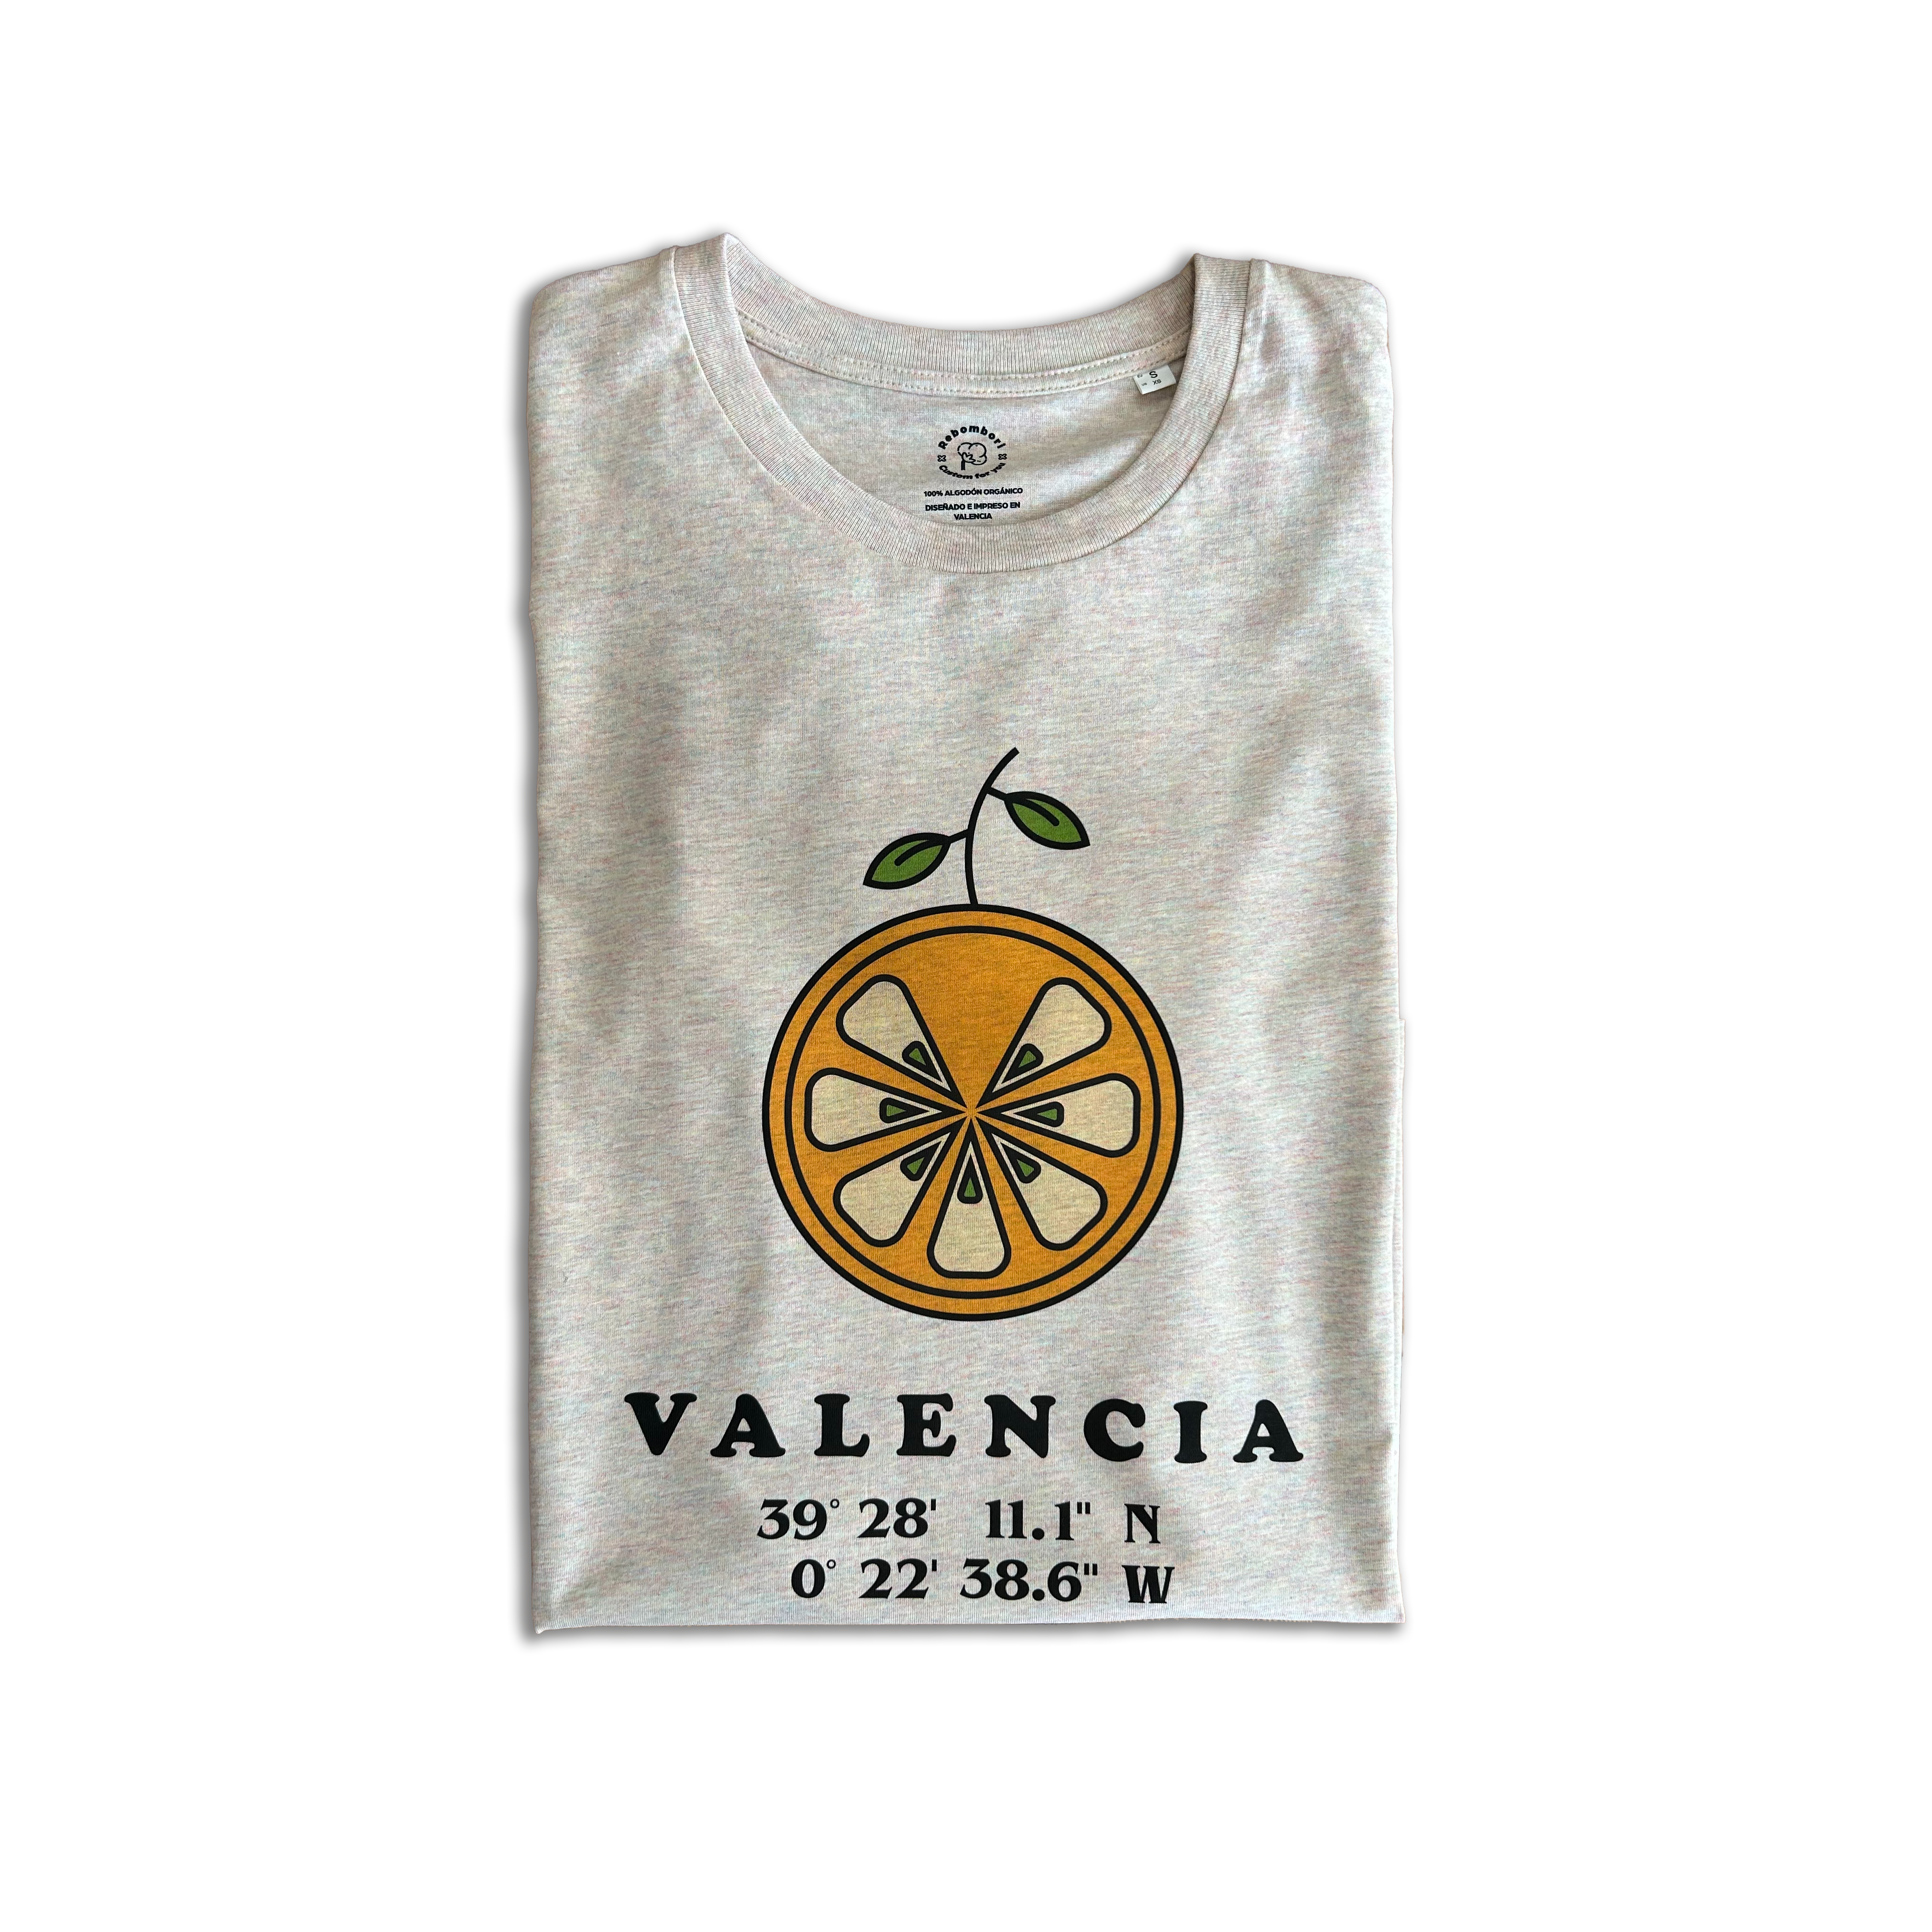 Camiseta "Valencia" | 100% algodón orgánico - Rebombori.es